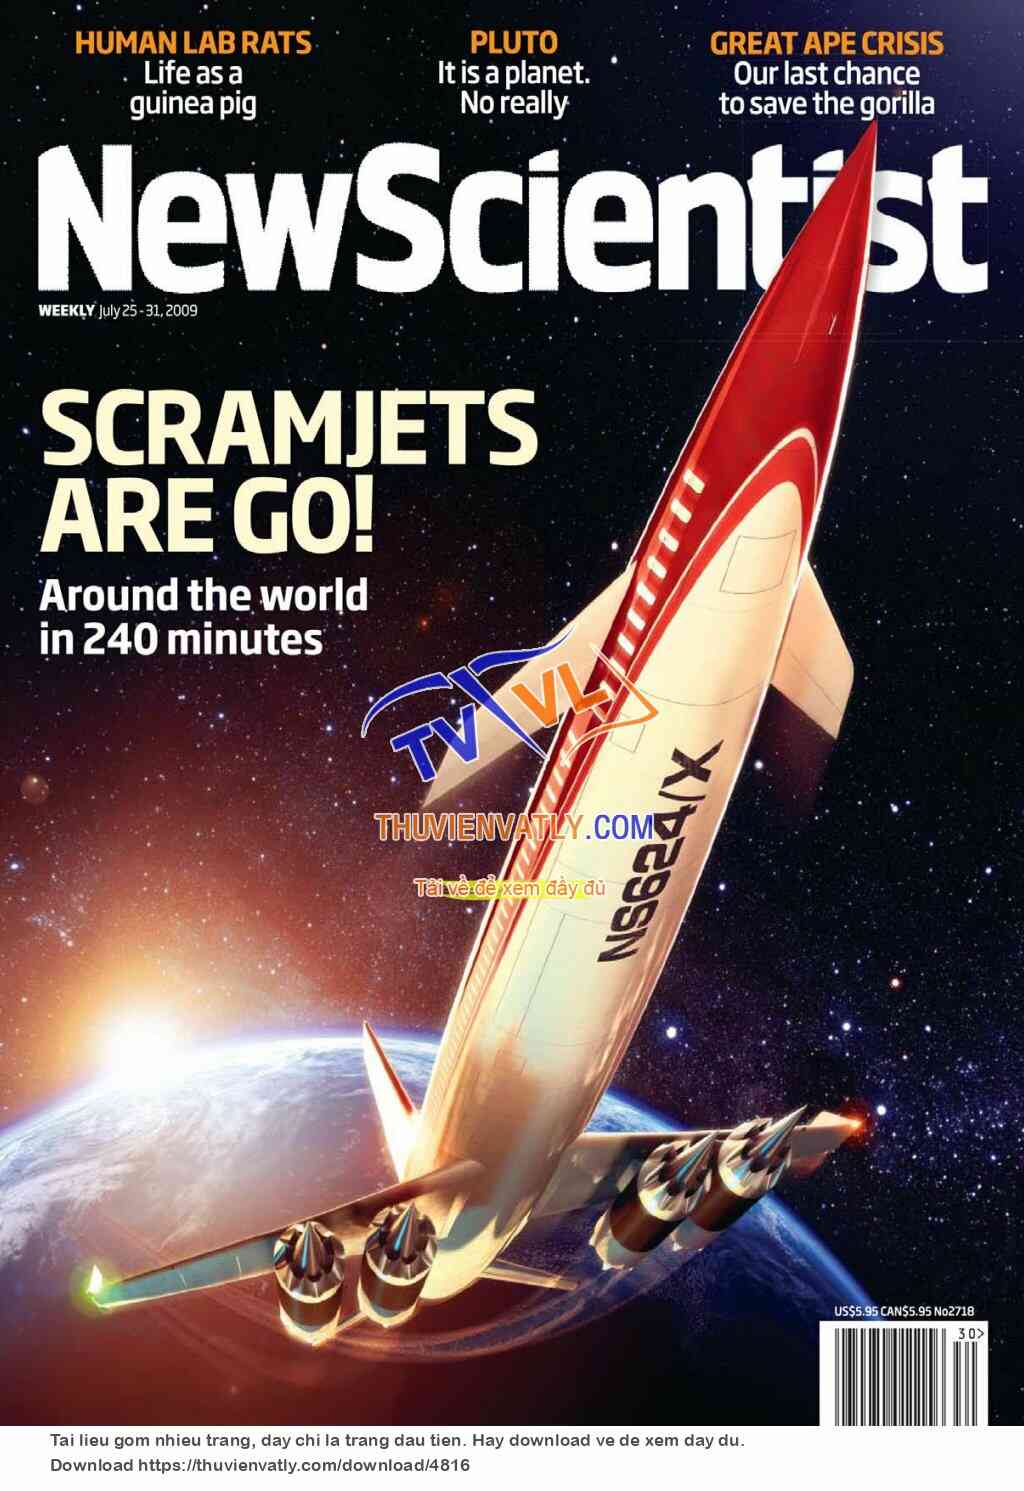 New Scientist July 25 2009